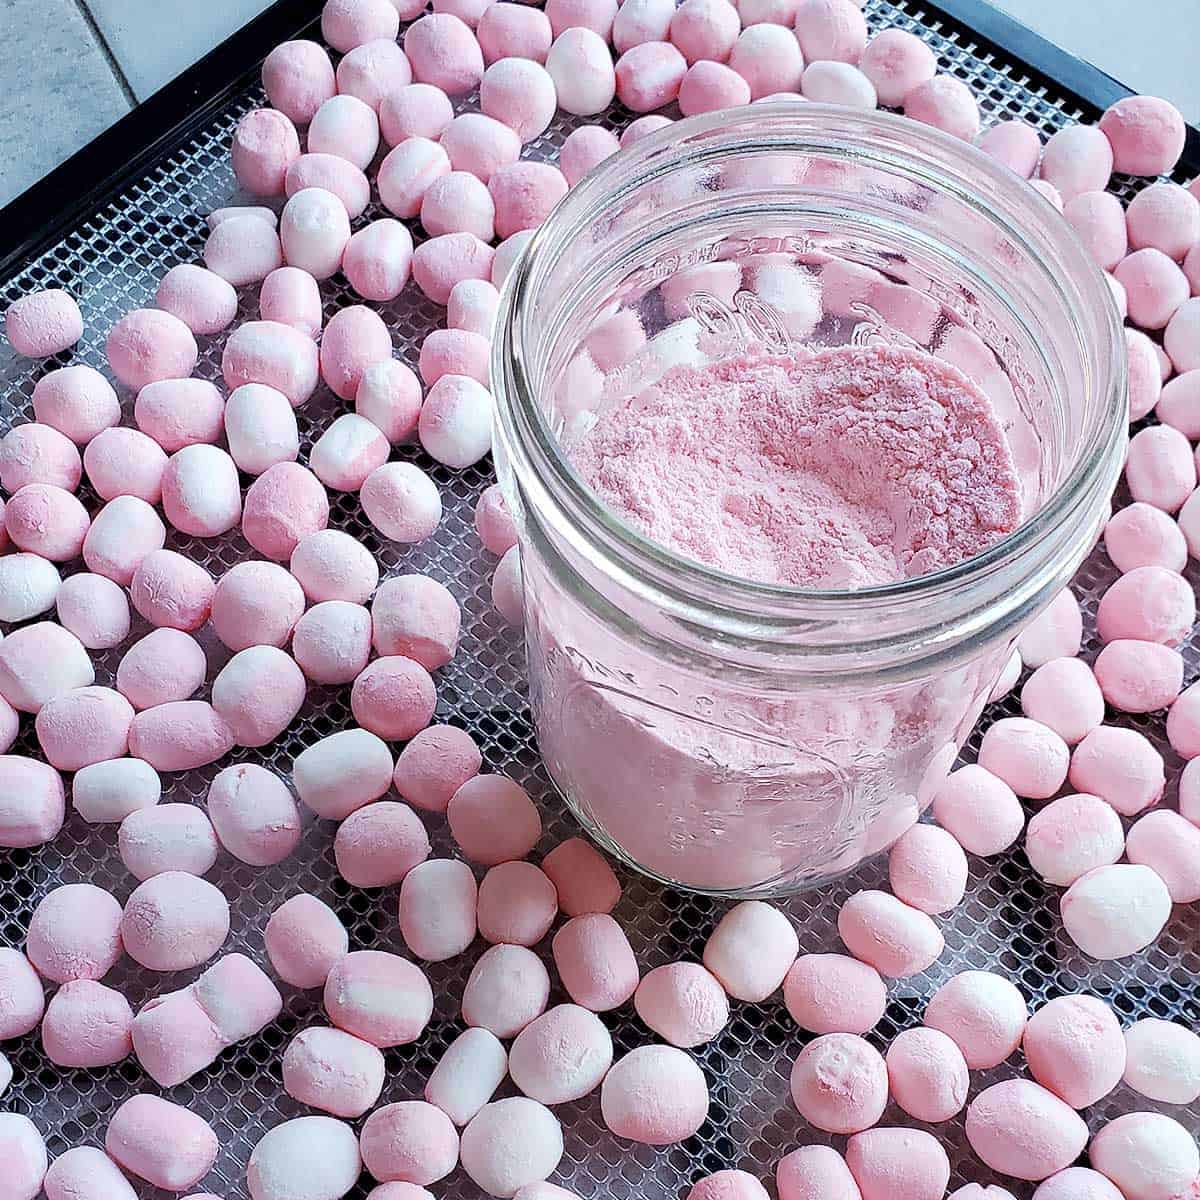 How To Dehydrate Marshmallows Make Marshmallow Powder The Purposeful Pantry